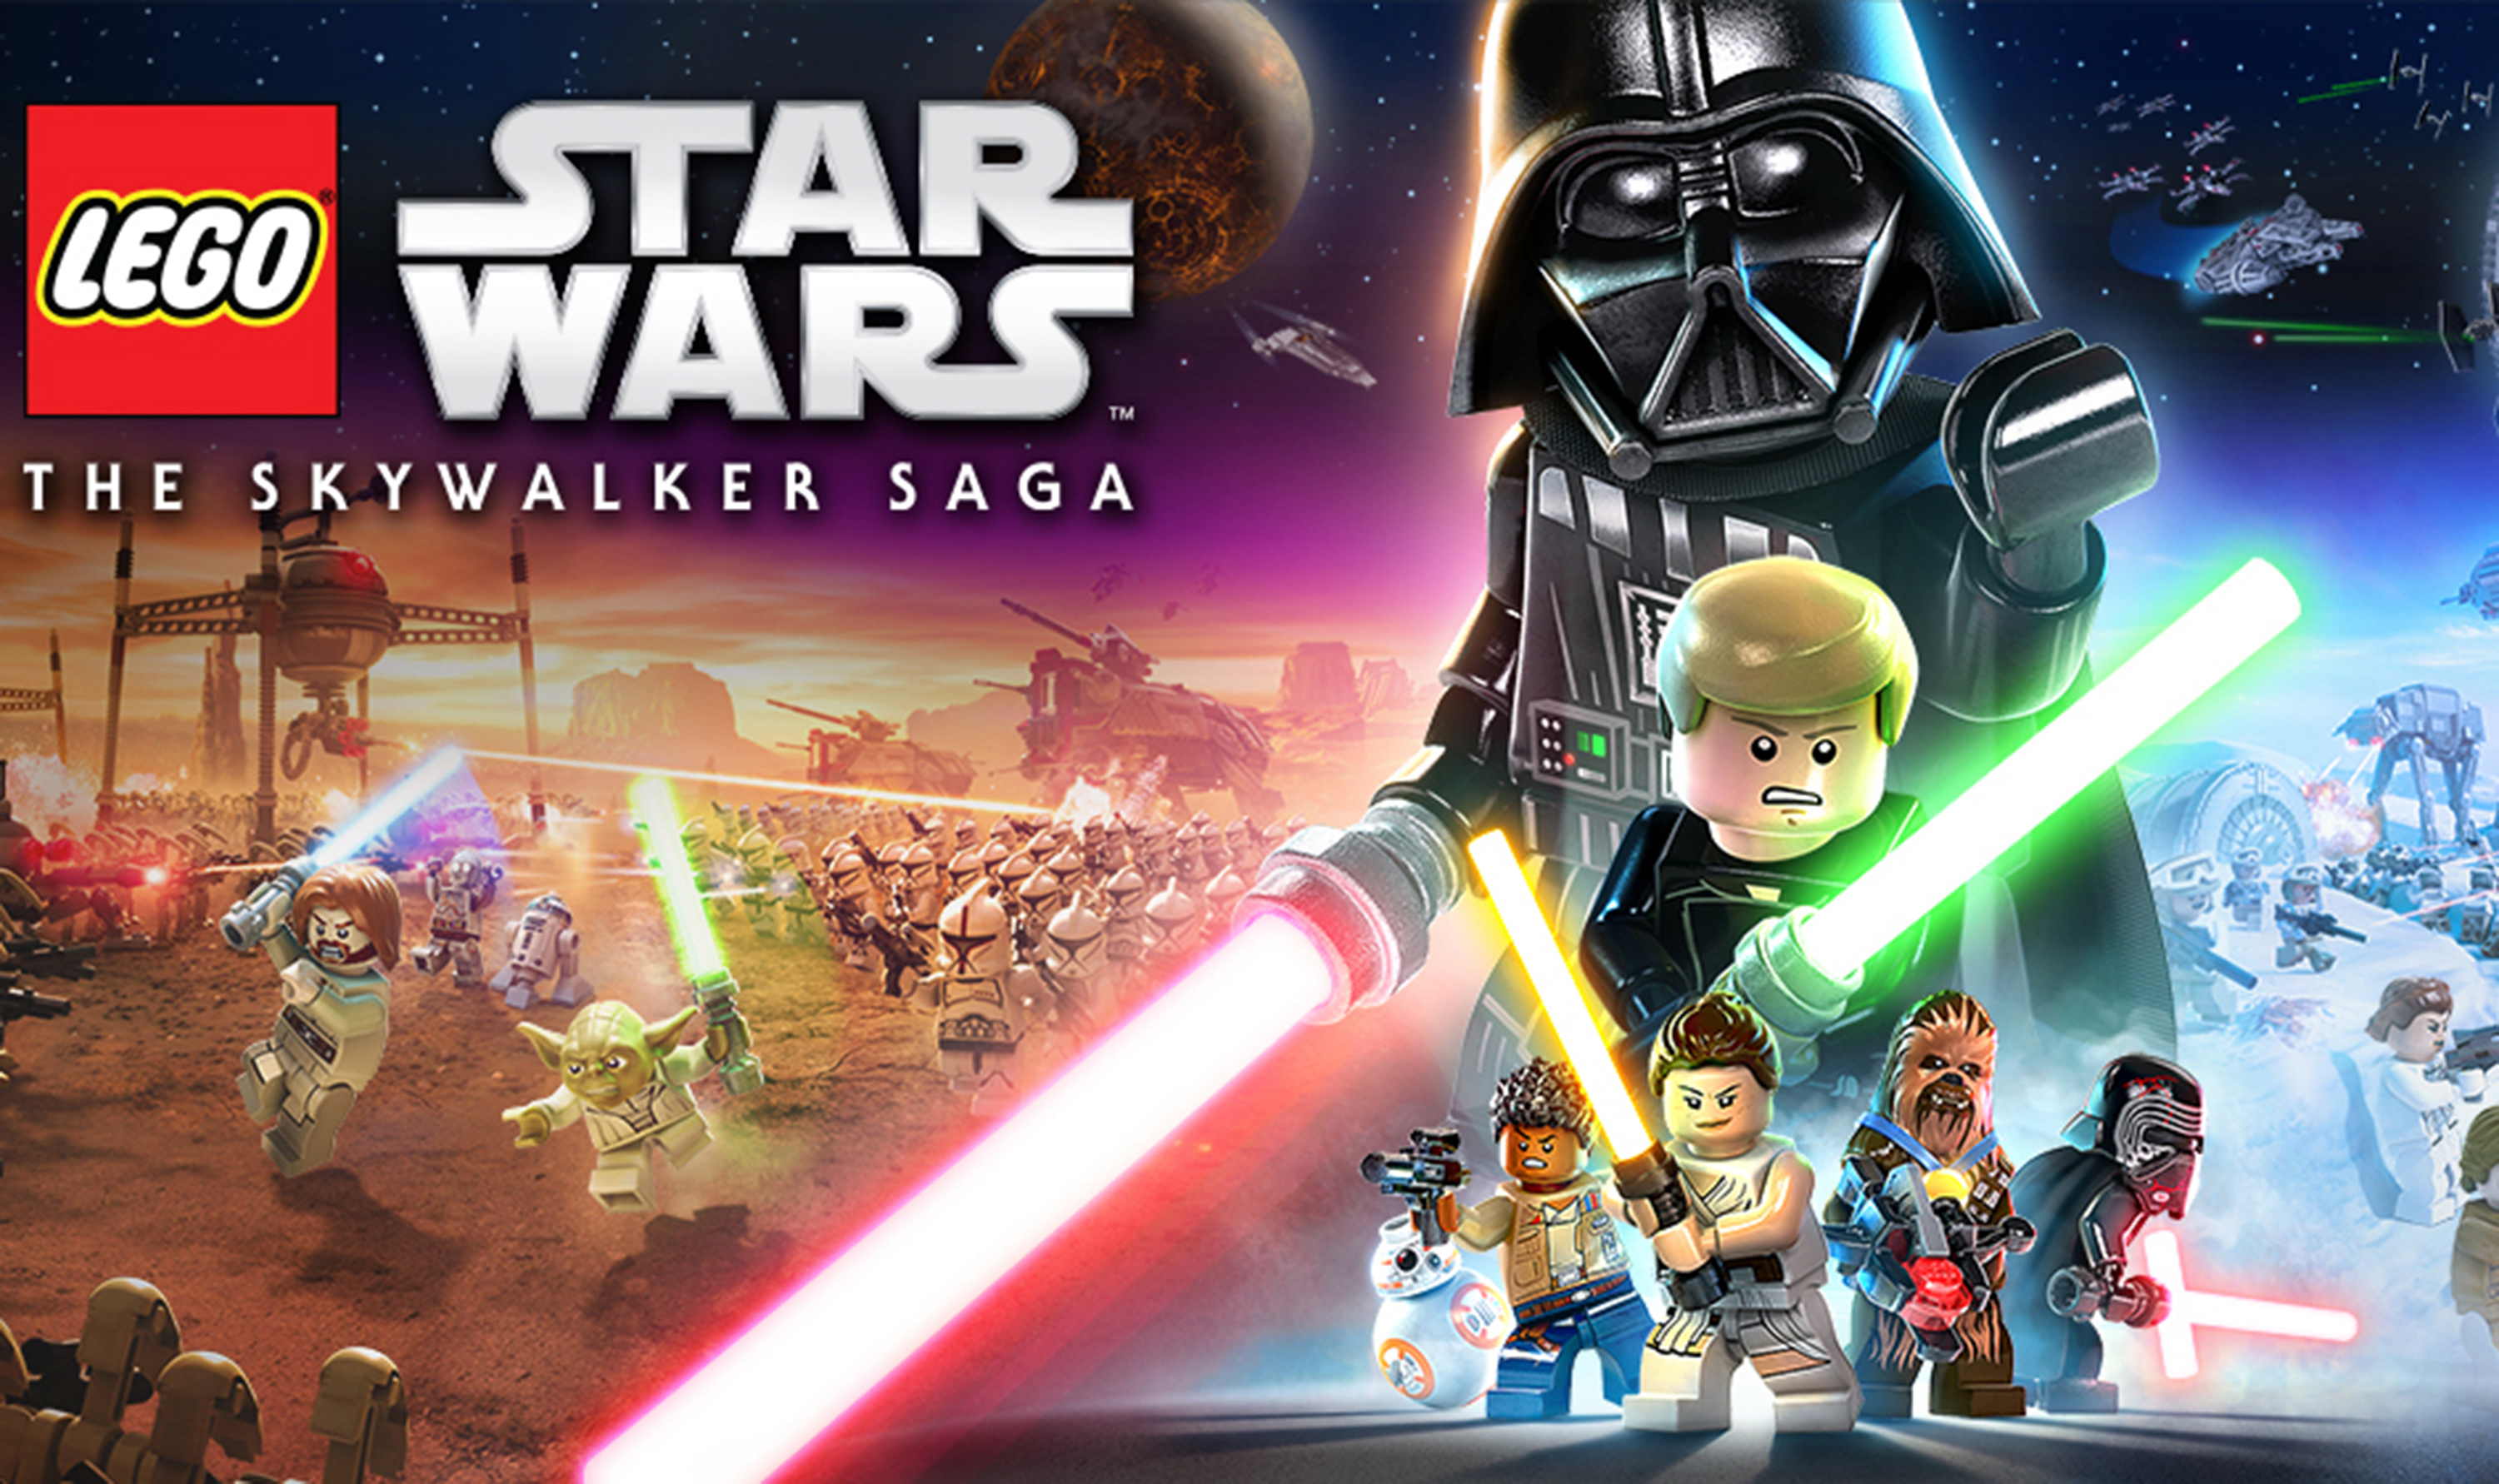 xbox lego star wars the skywalker saga